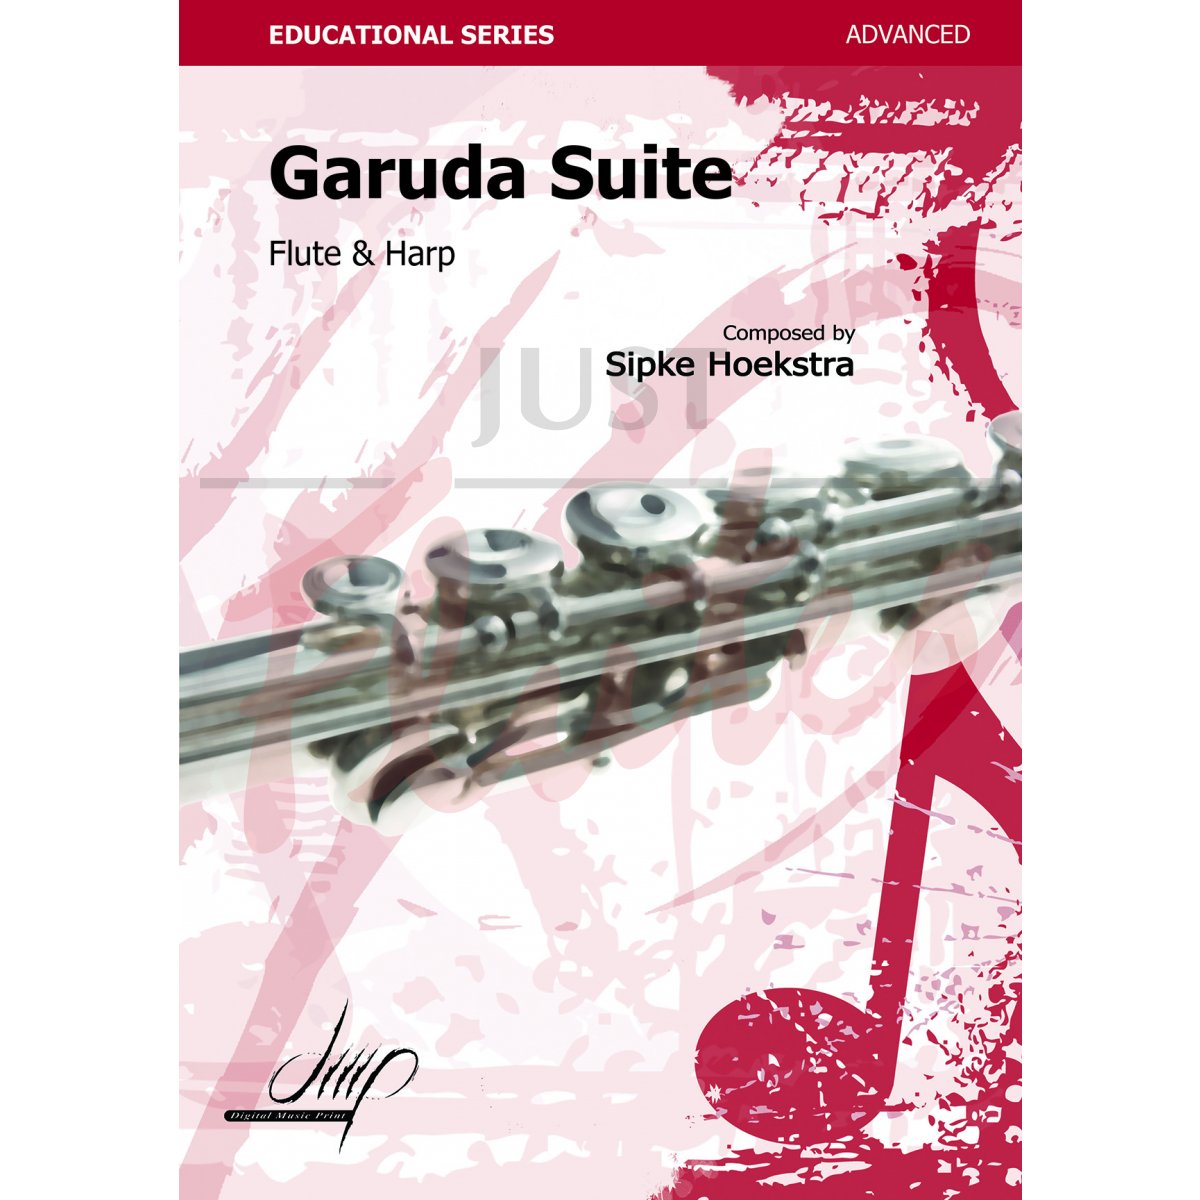 Garuda Suite